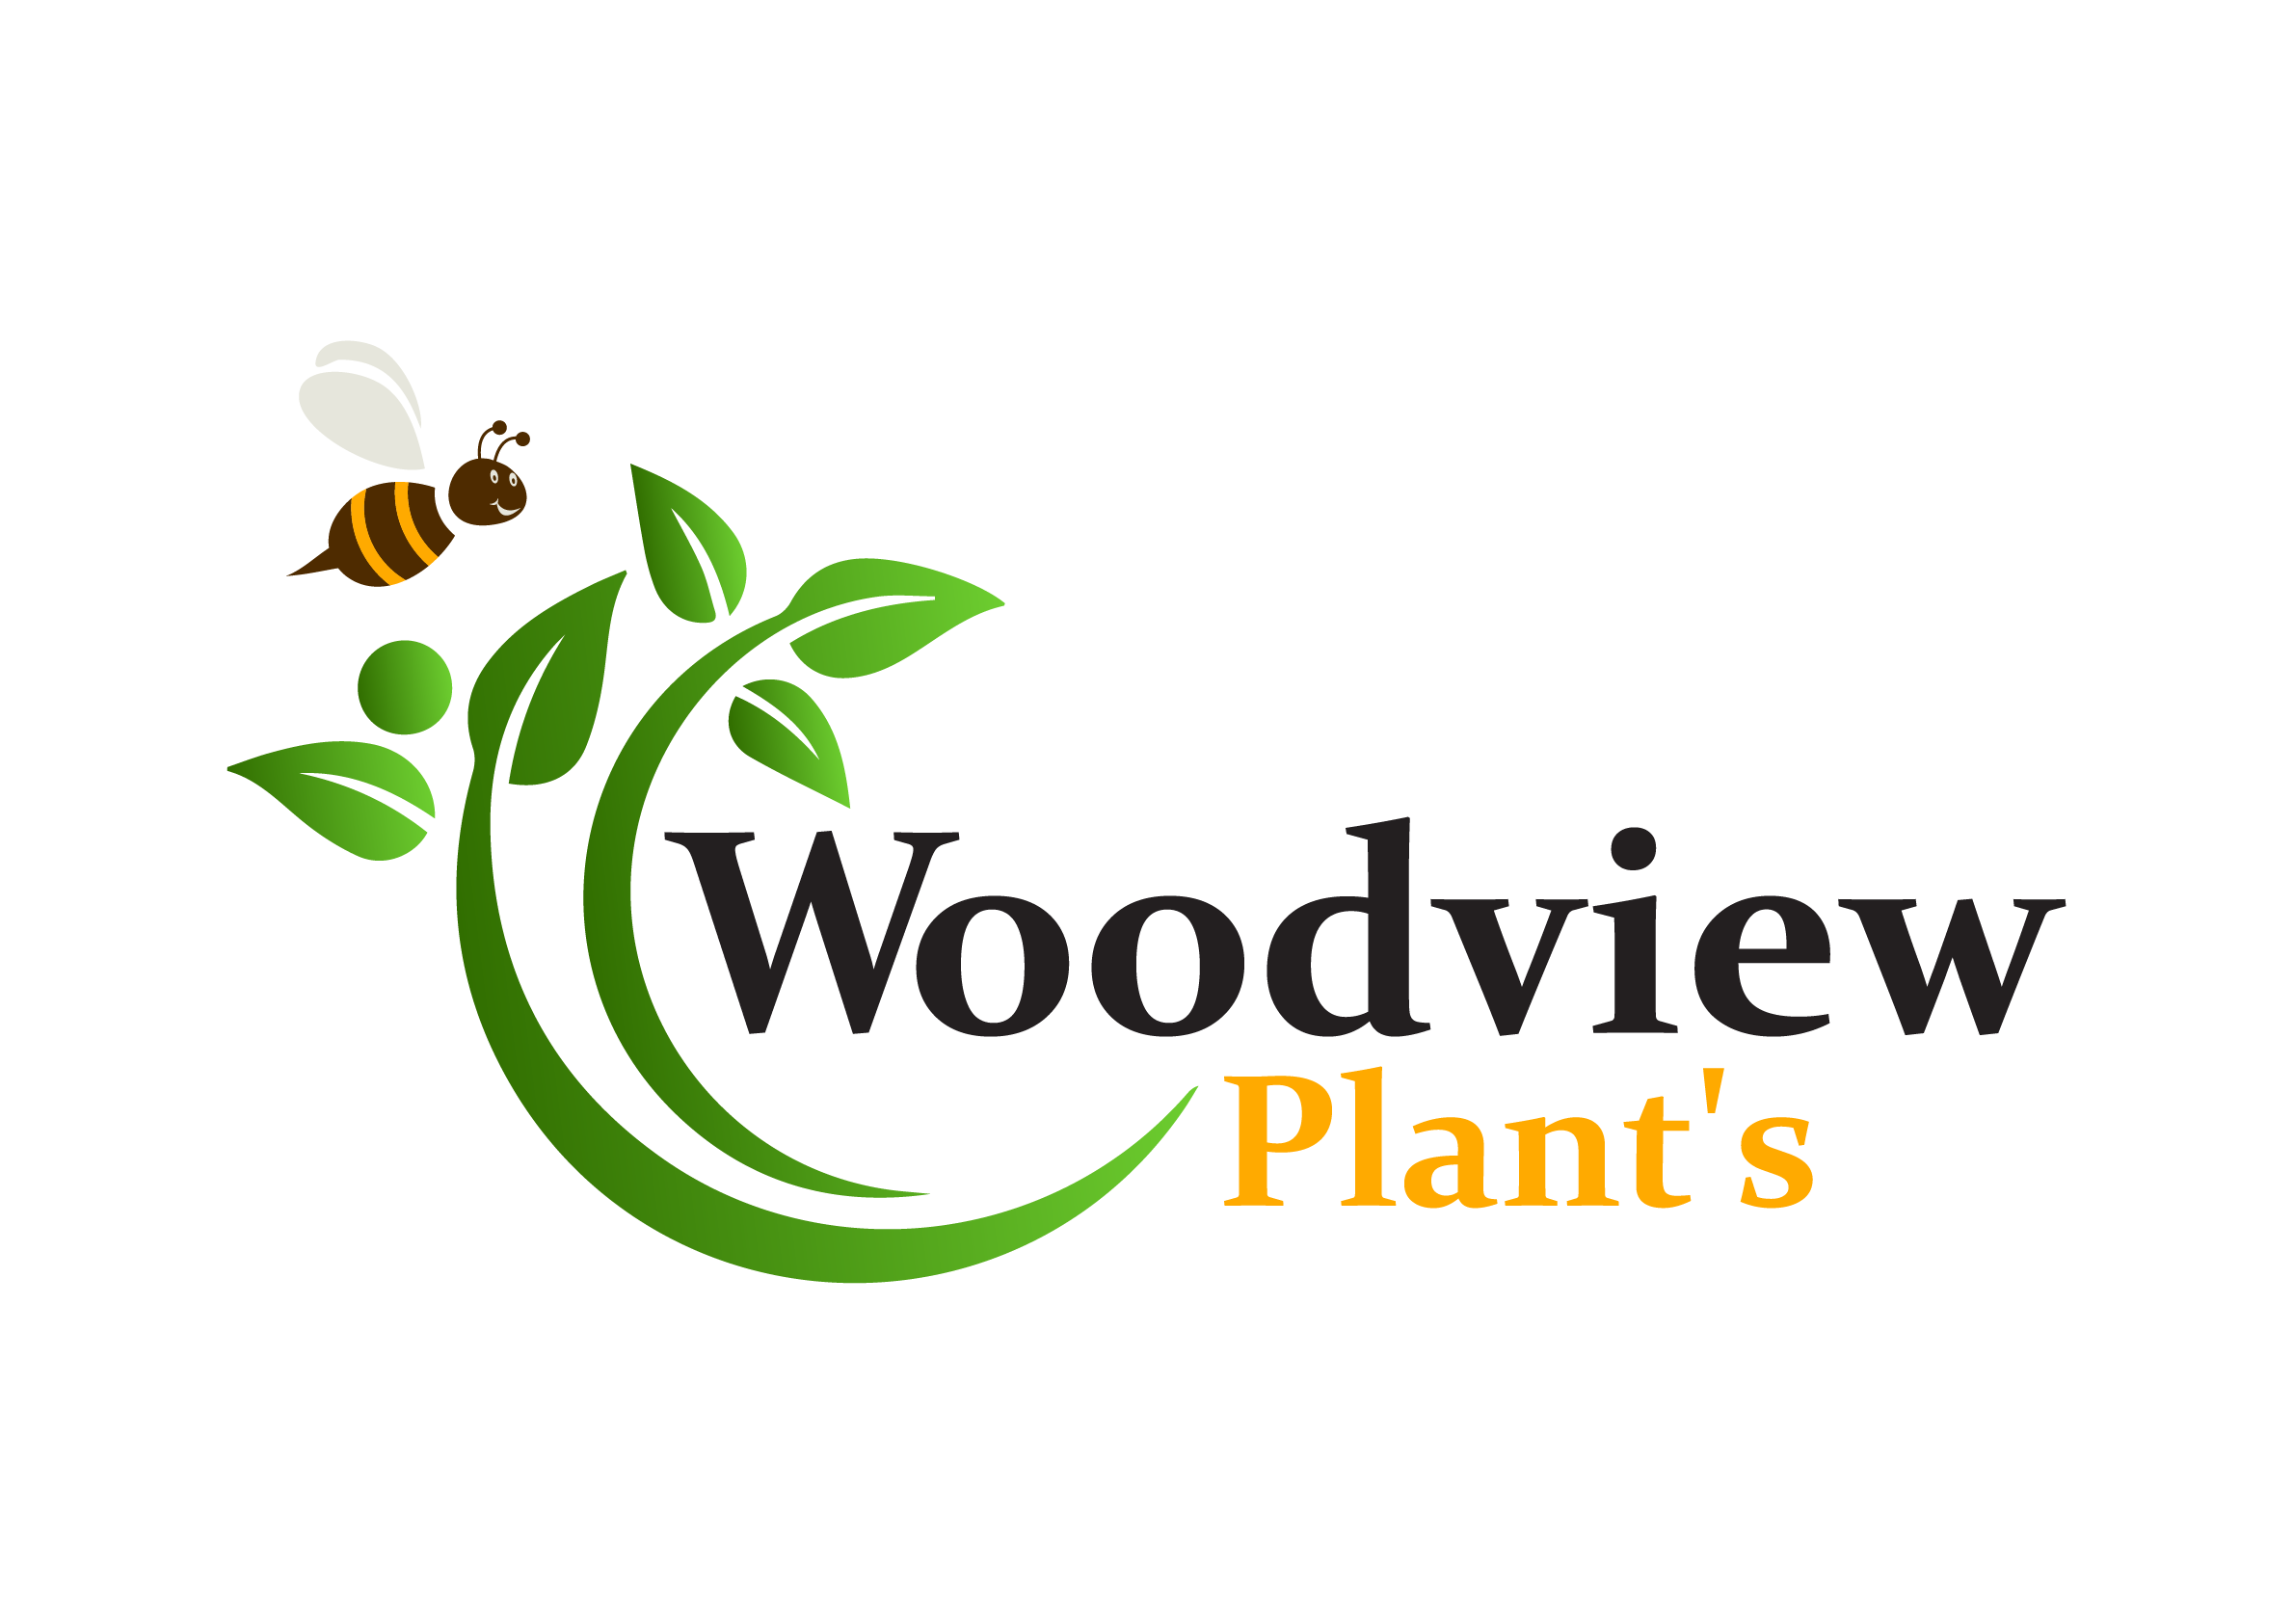 Woodview Plants